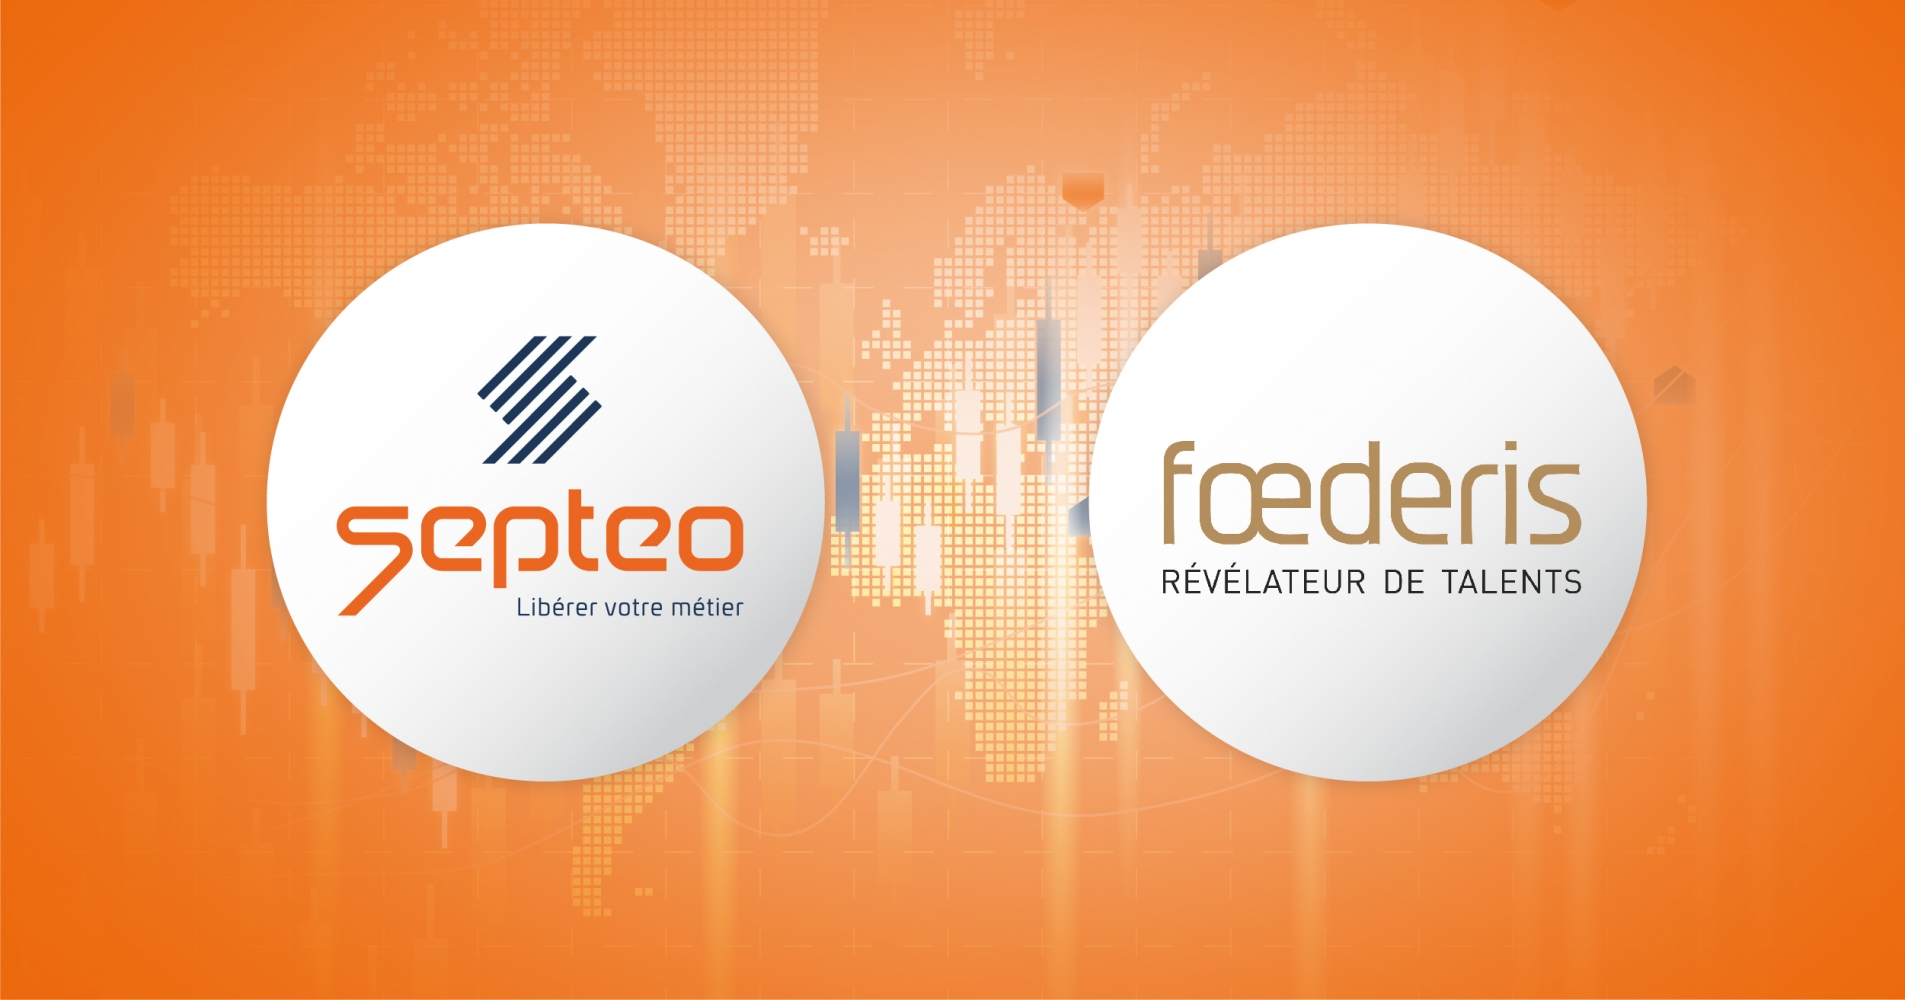 Fœderis joins Septeo Group